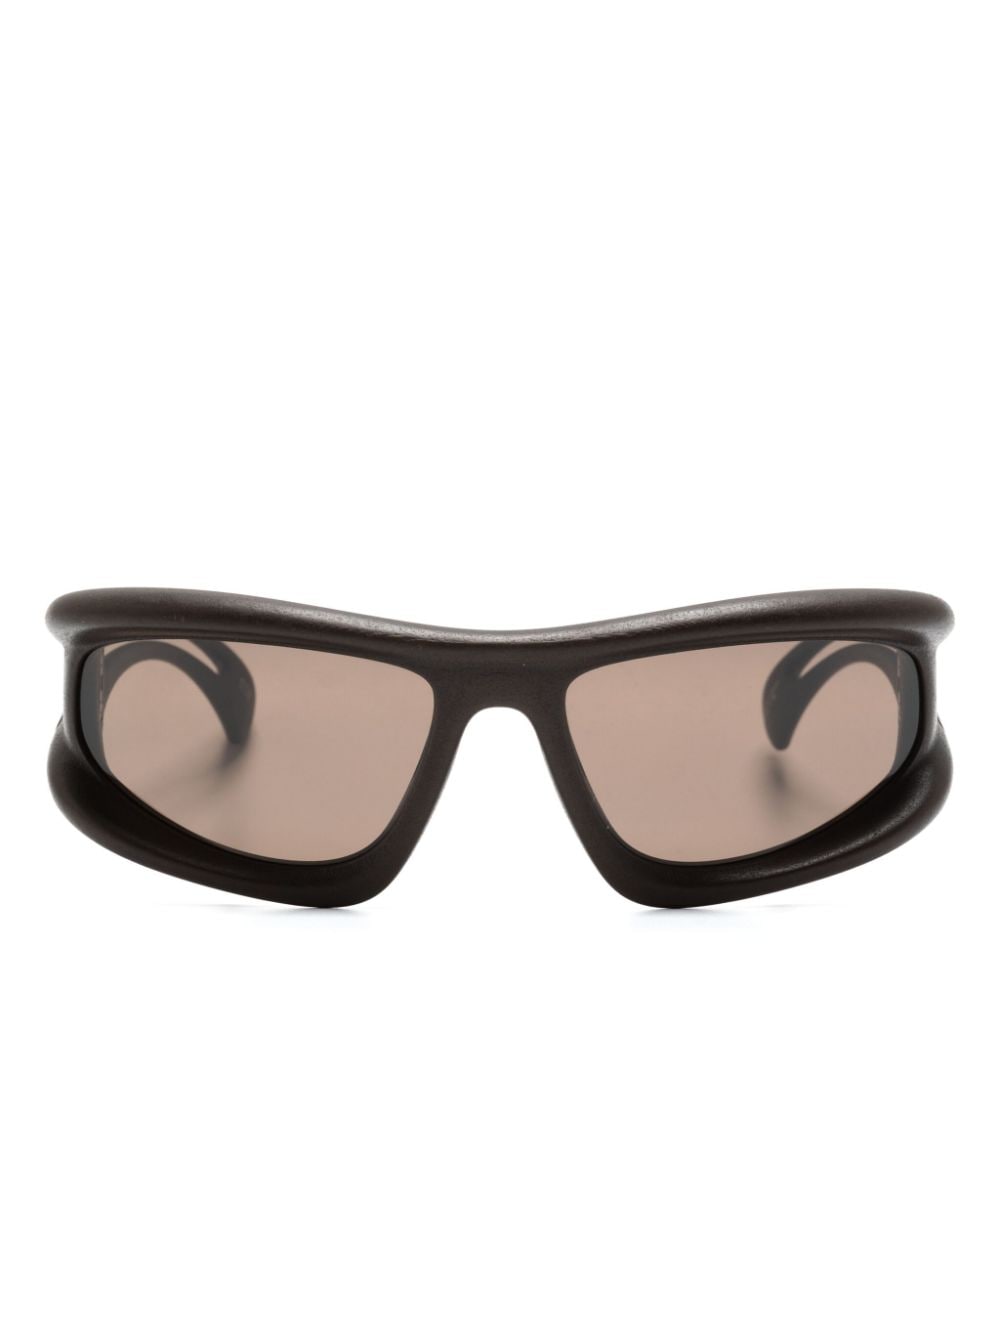 Image 1 of Mykita Mafra cat-eye sunglasses